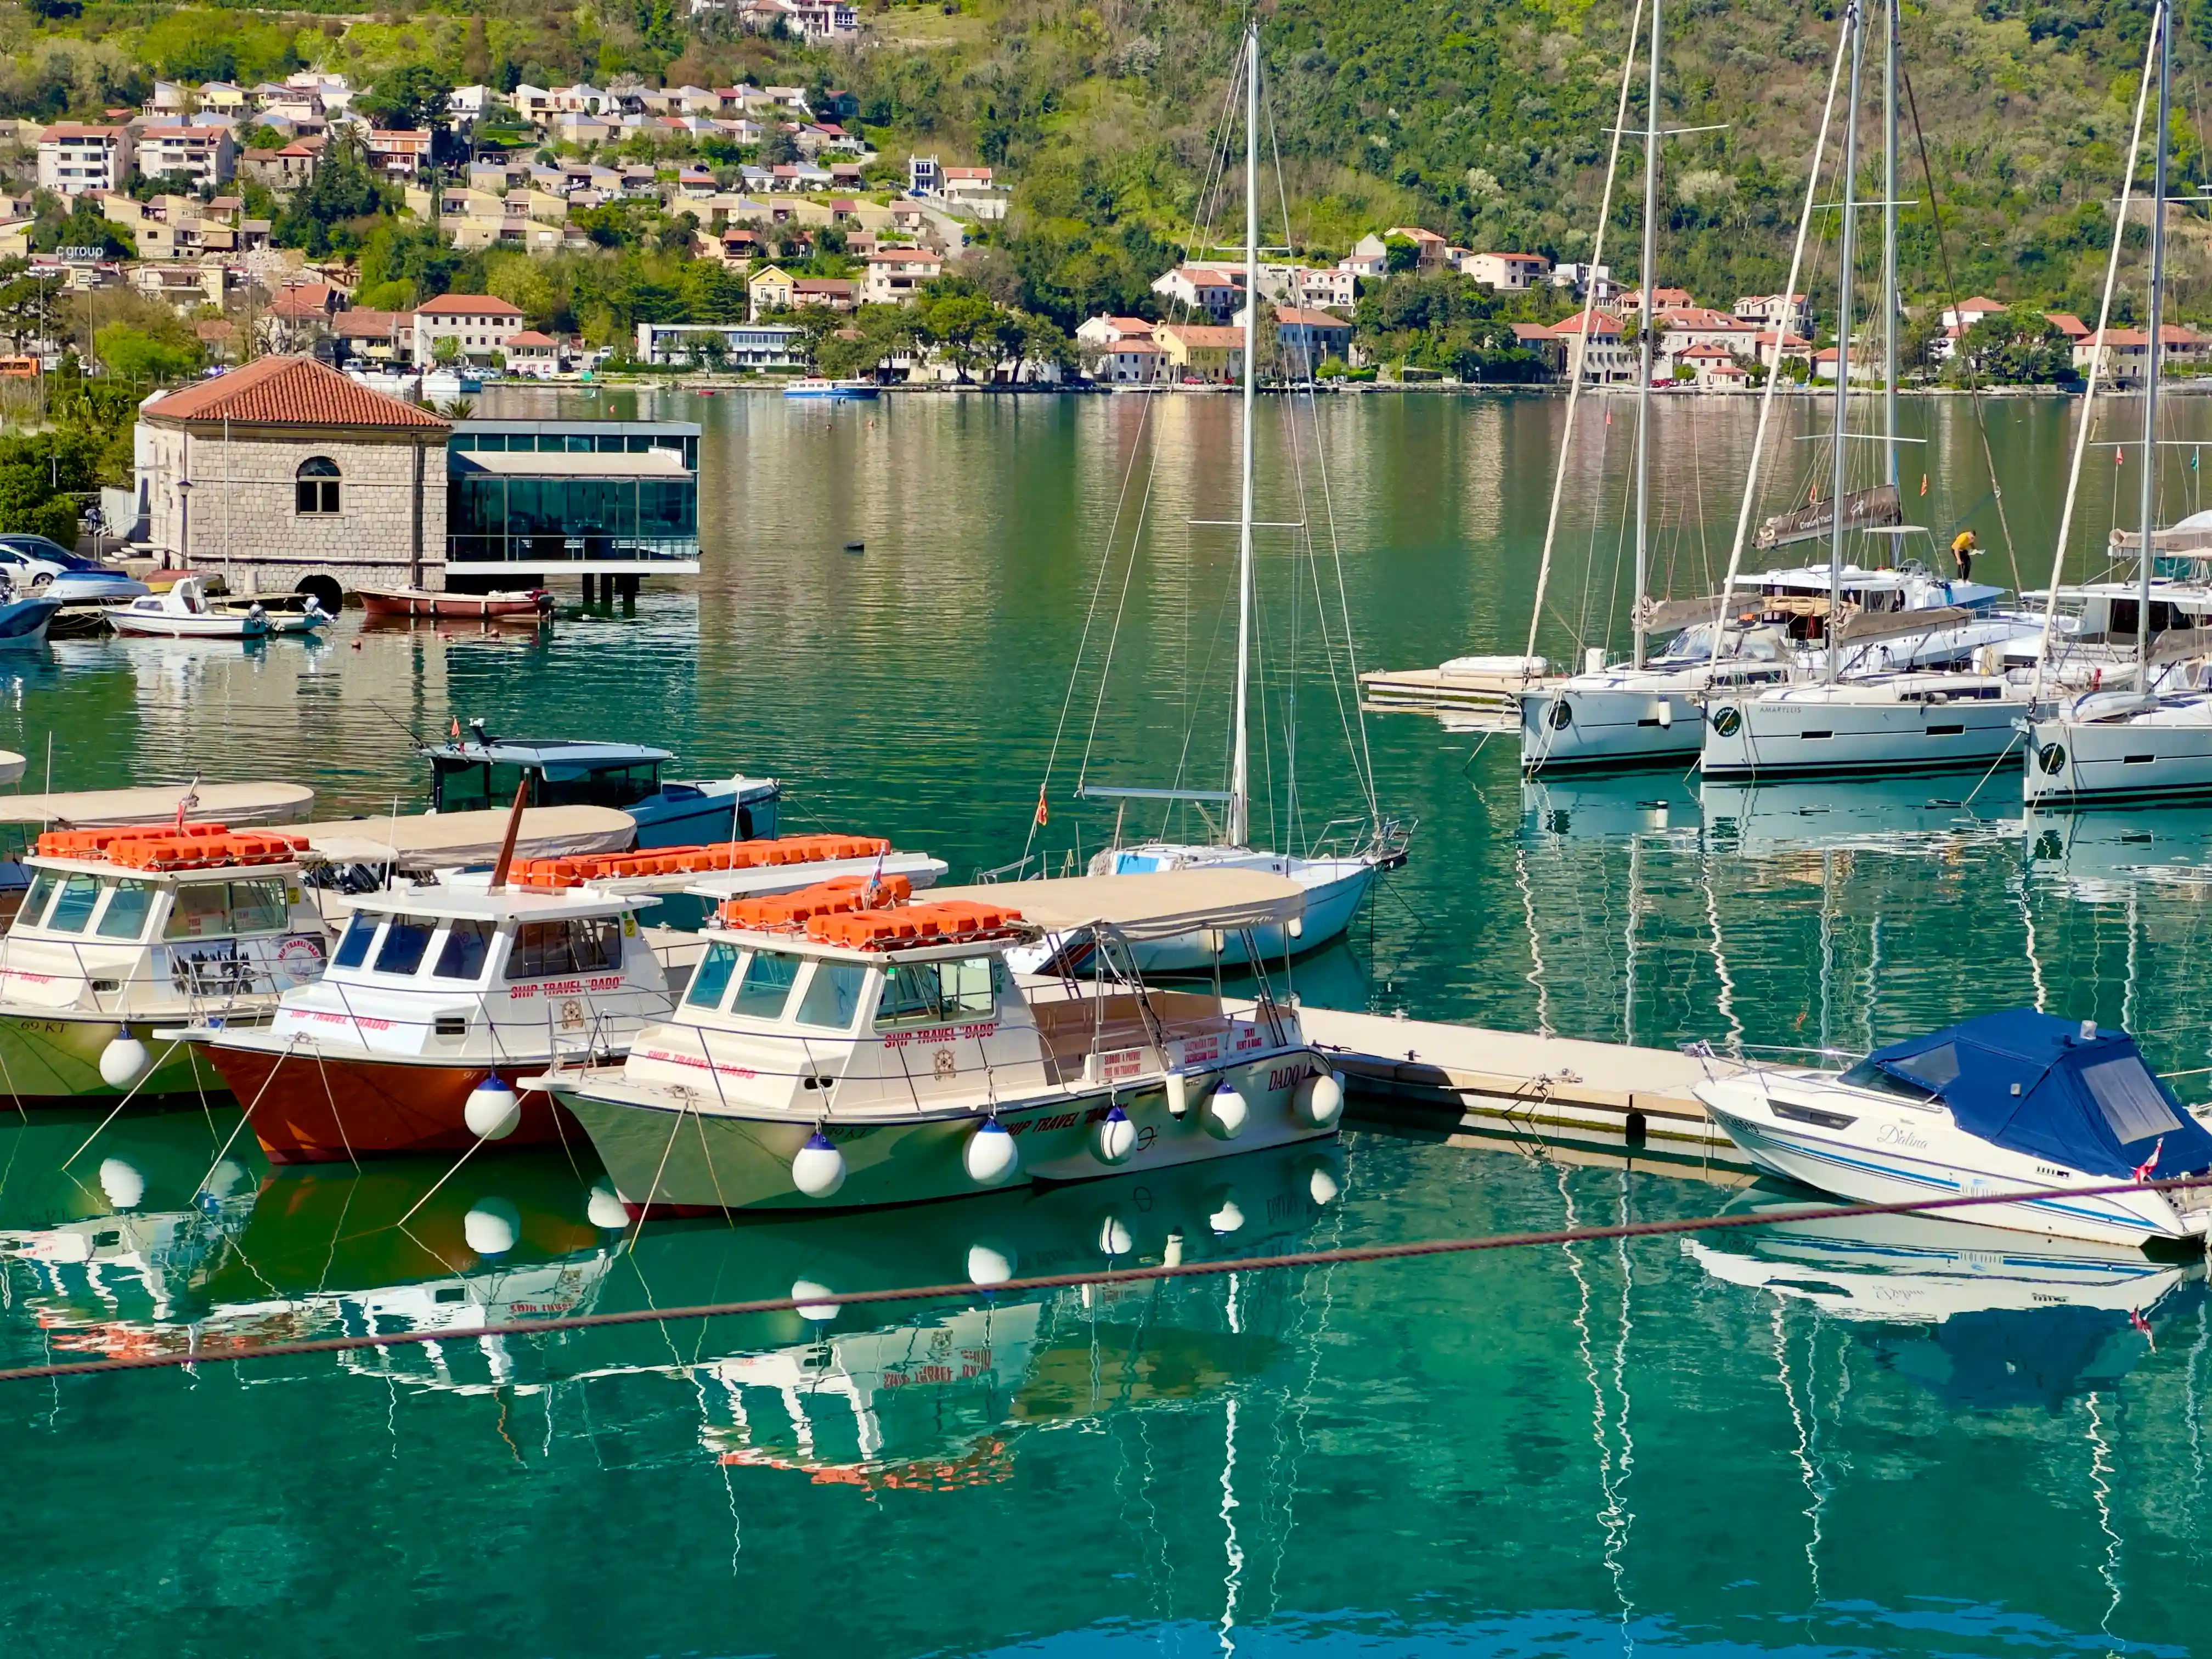 Imagine Is Kotor Montenegro worth visiting? in Kotor